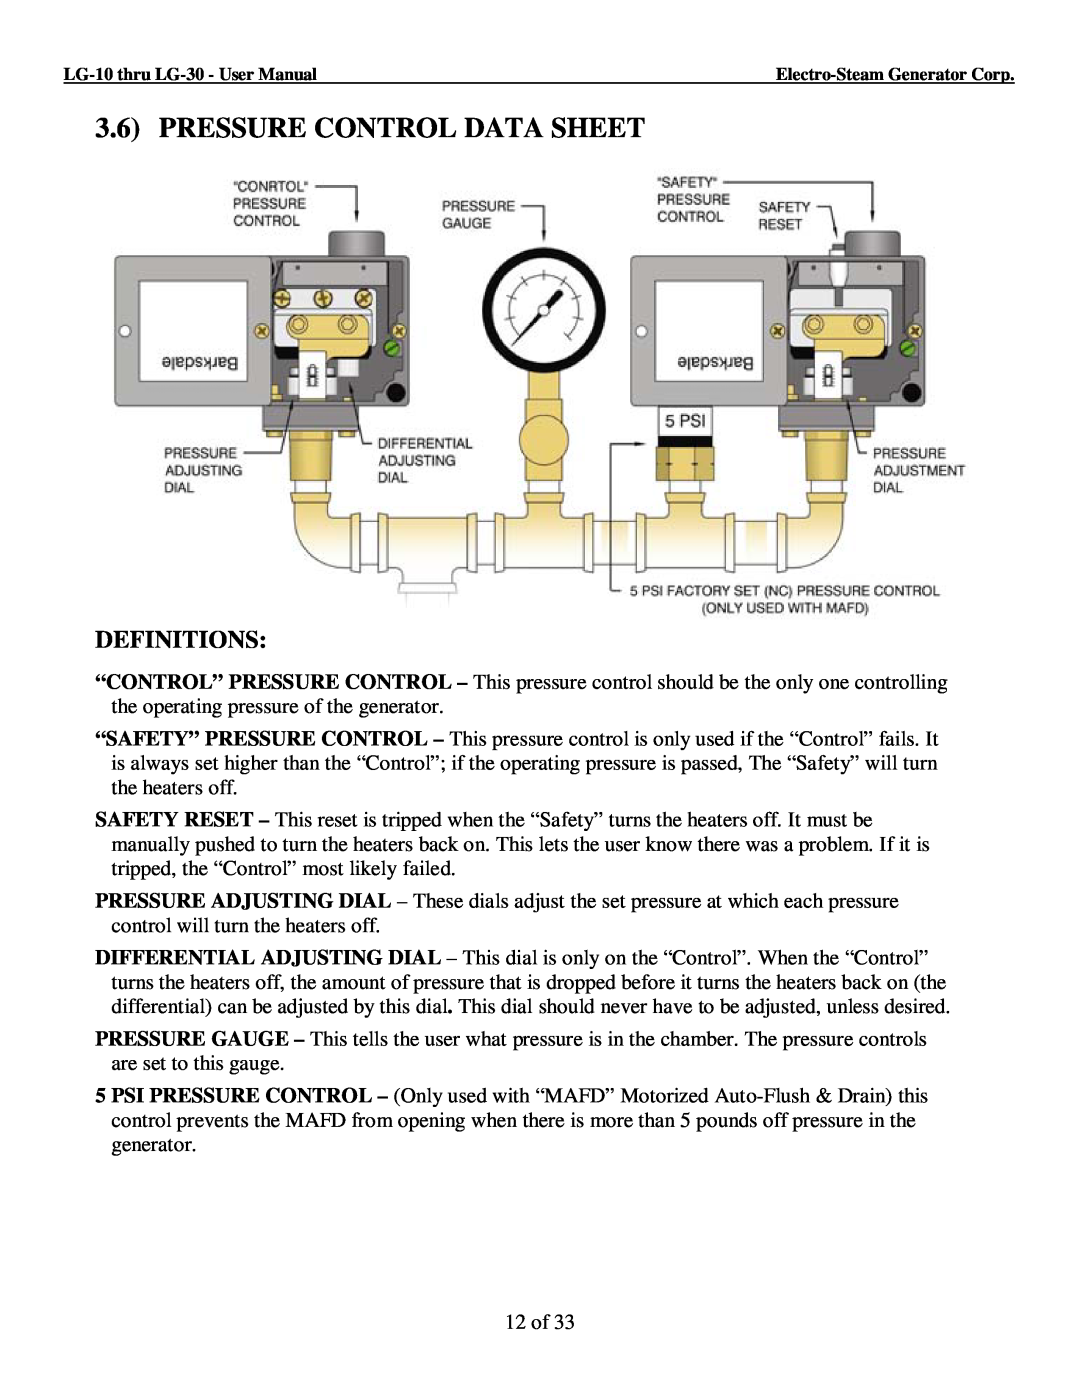 LG Electronics 30, 10 user manual Pressure Control Data Sheet, Definitions 